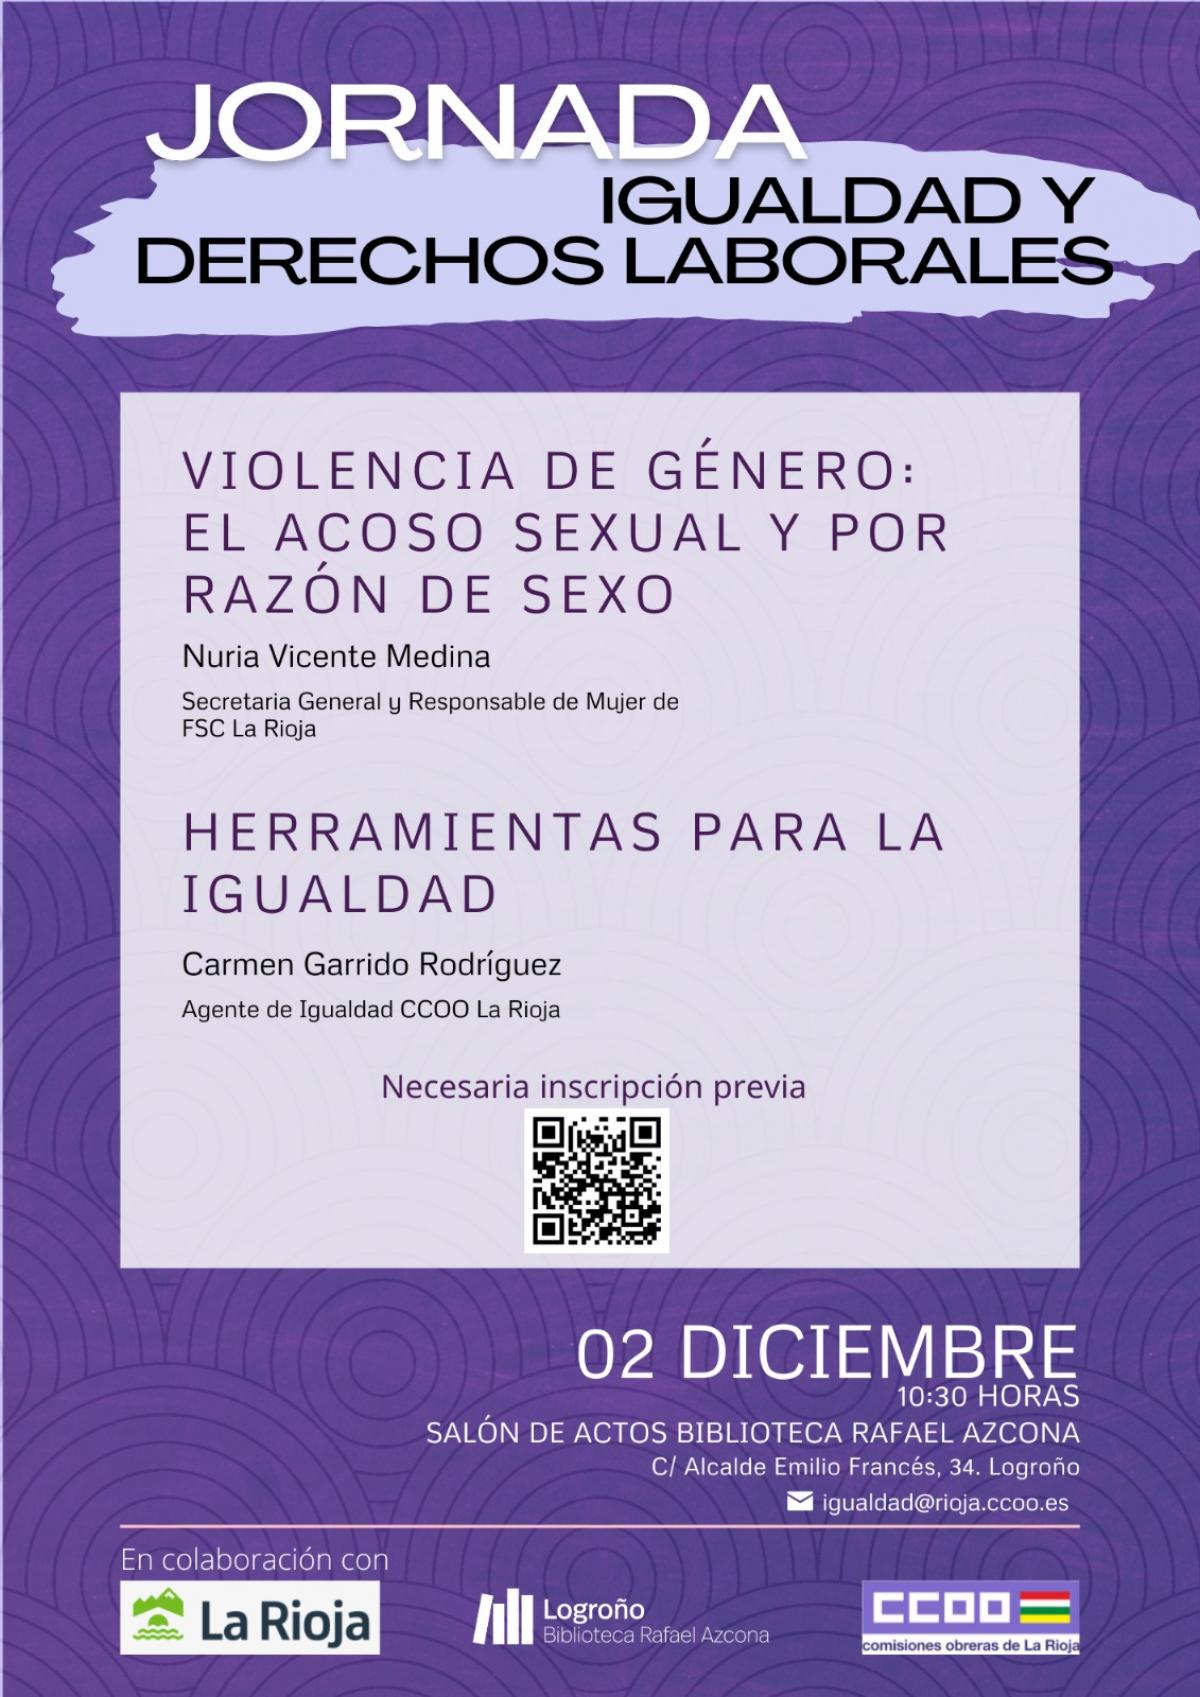 Jornada Igualdad en la Biblioteca Rafael Azcona